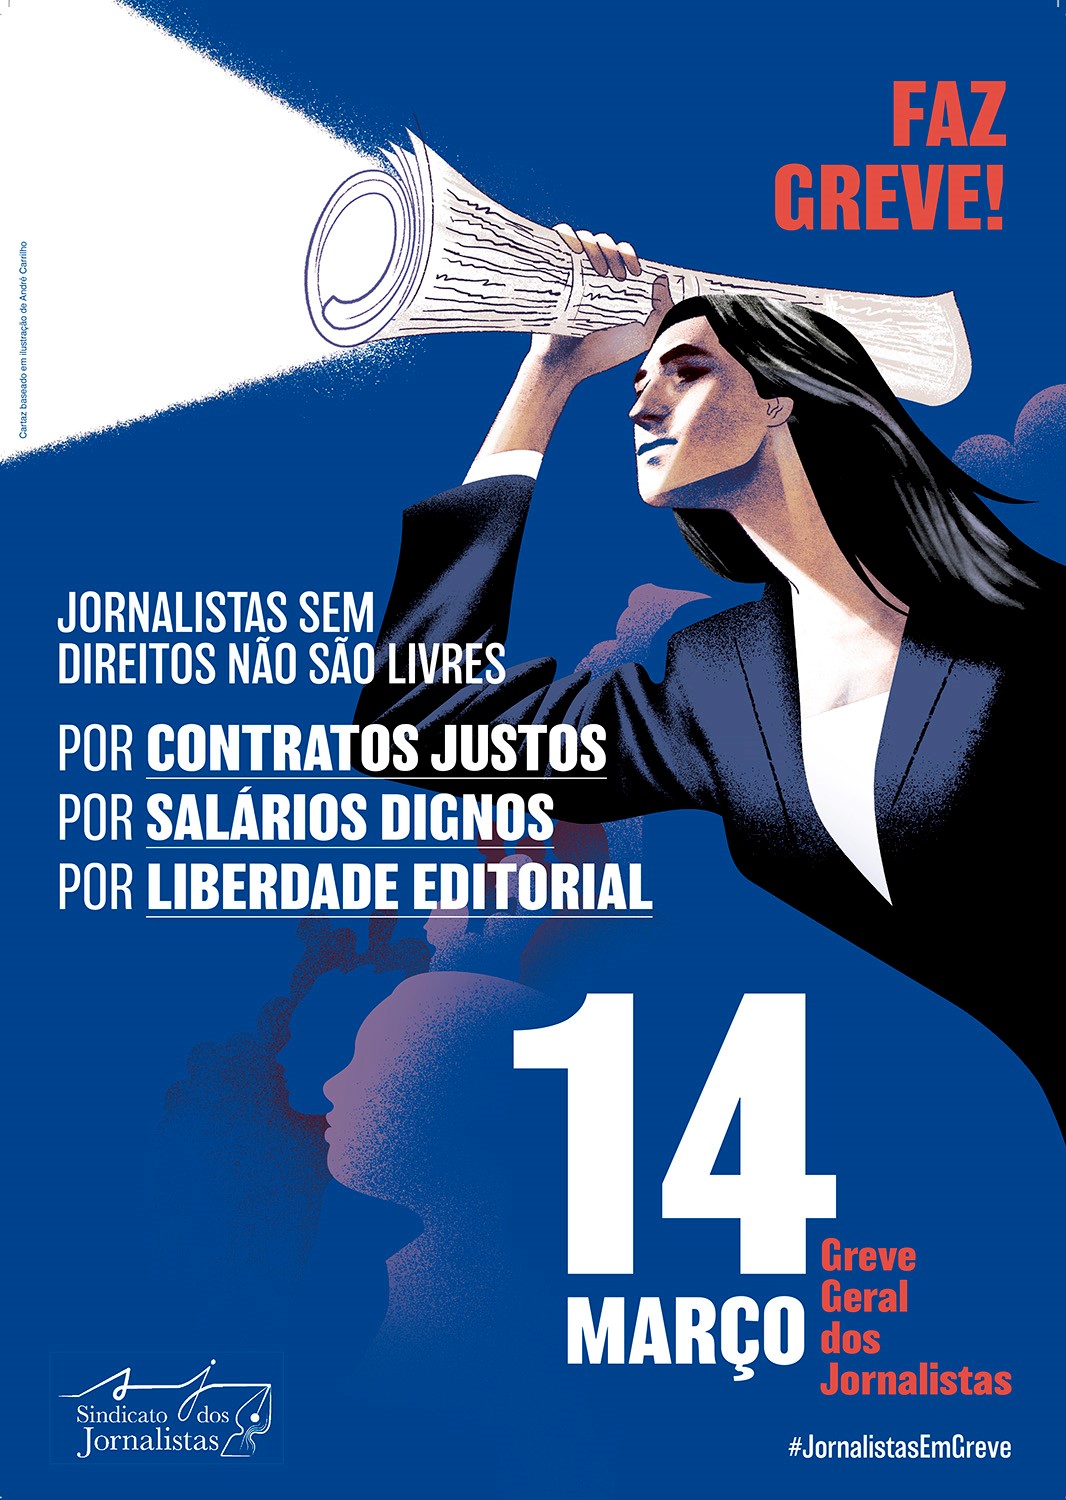 Greve Geral de Jornalistas: 14 de março